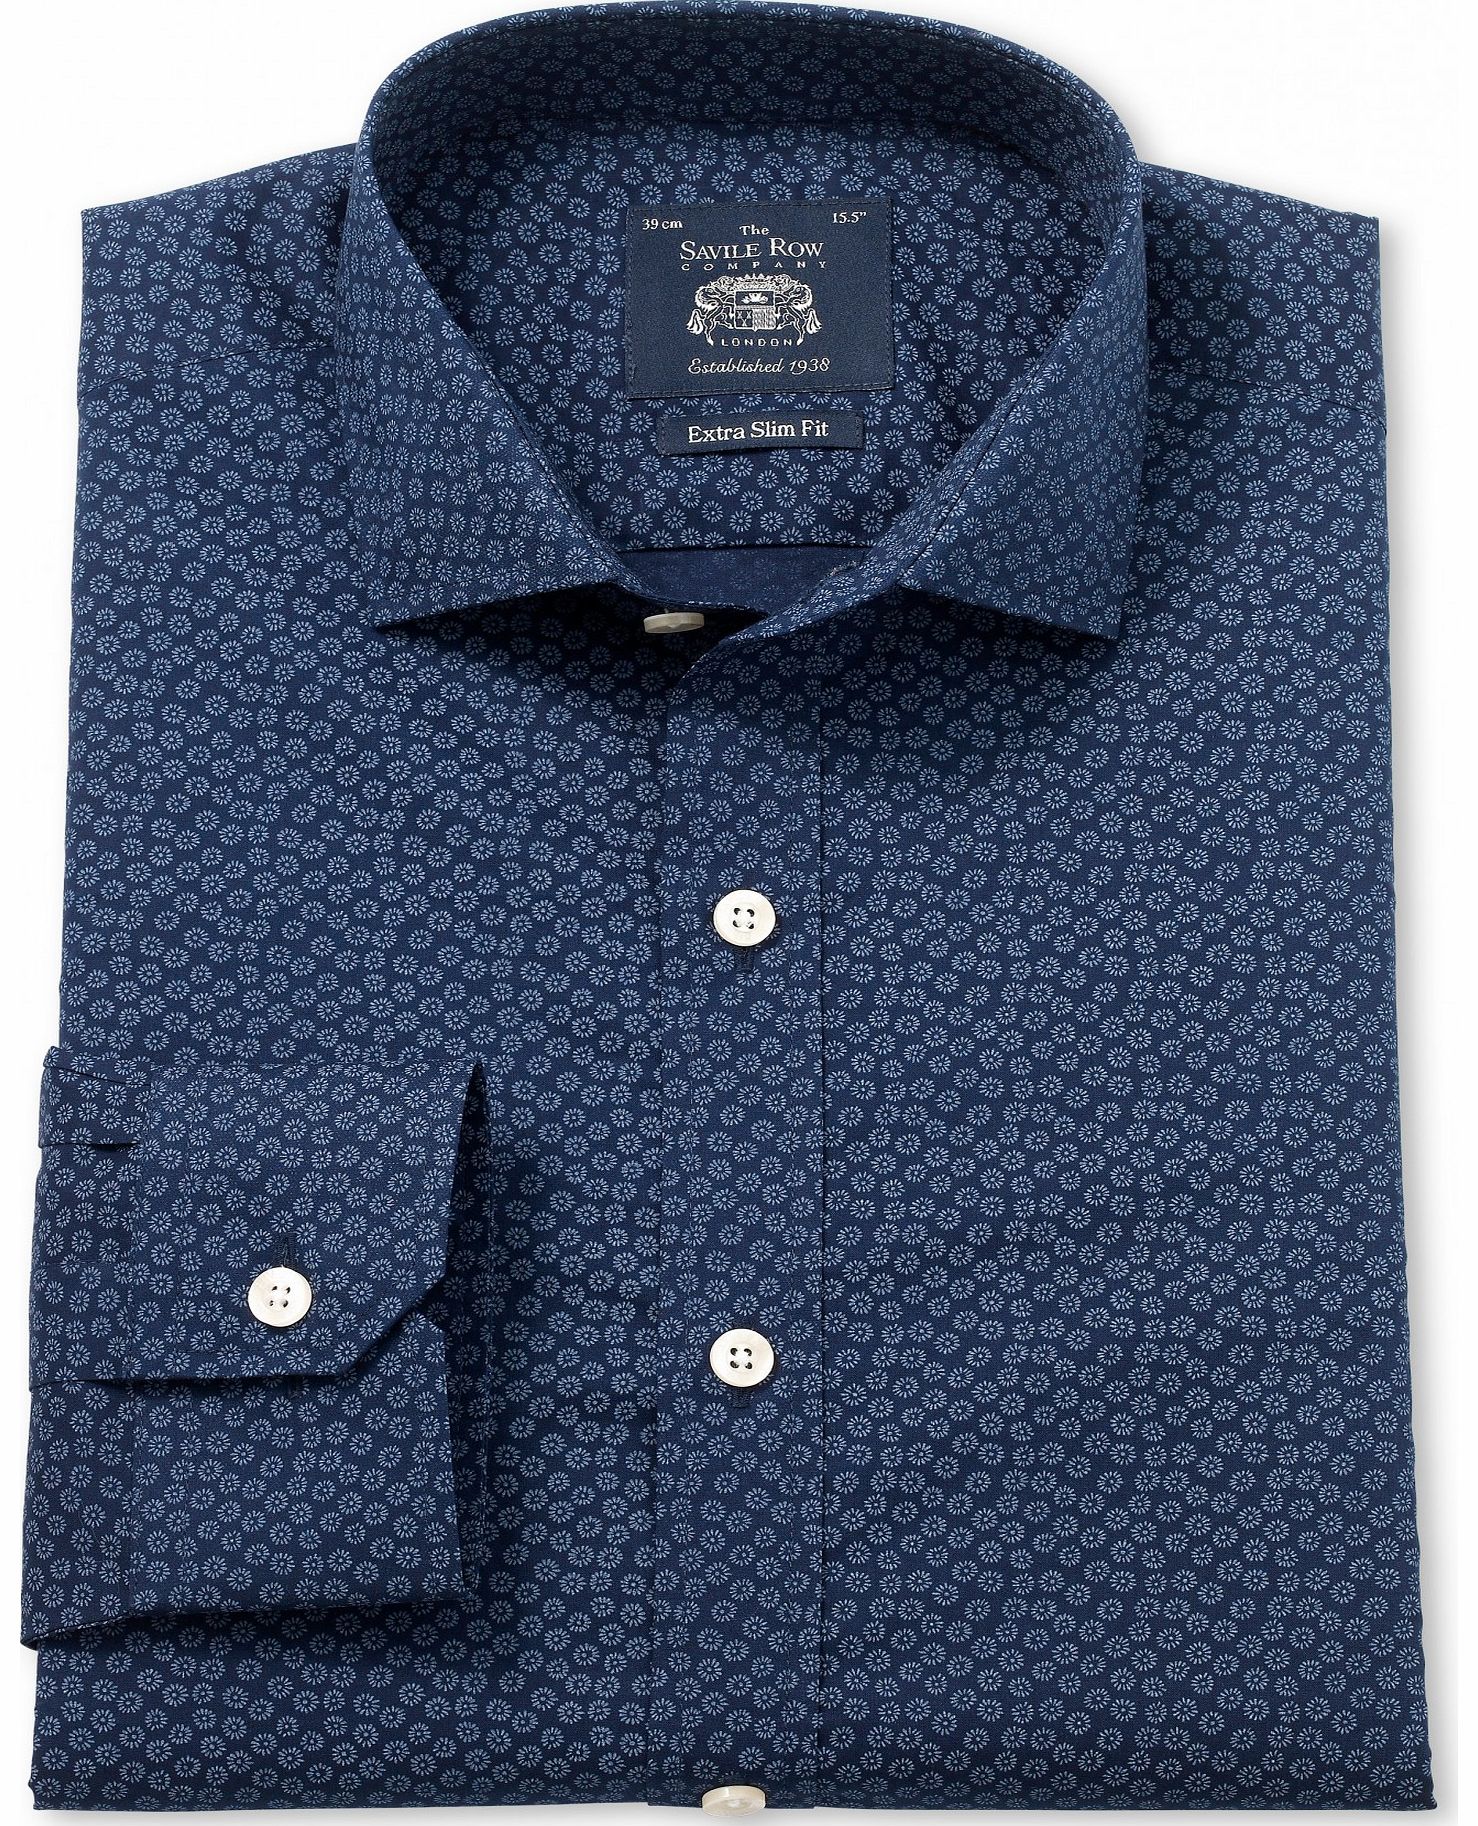 Savile Row Company Navy Blue Printed Extra Slim Fit Shirt 17 1/2``